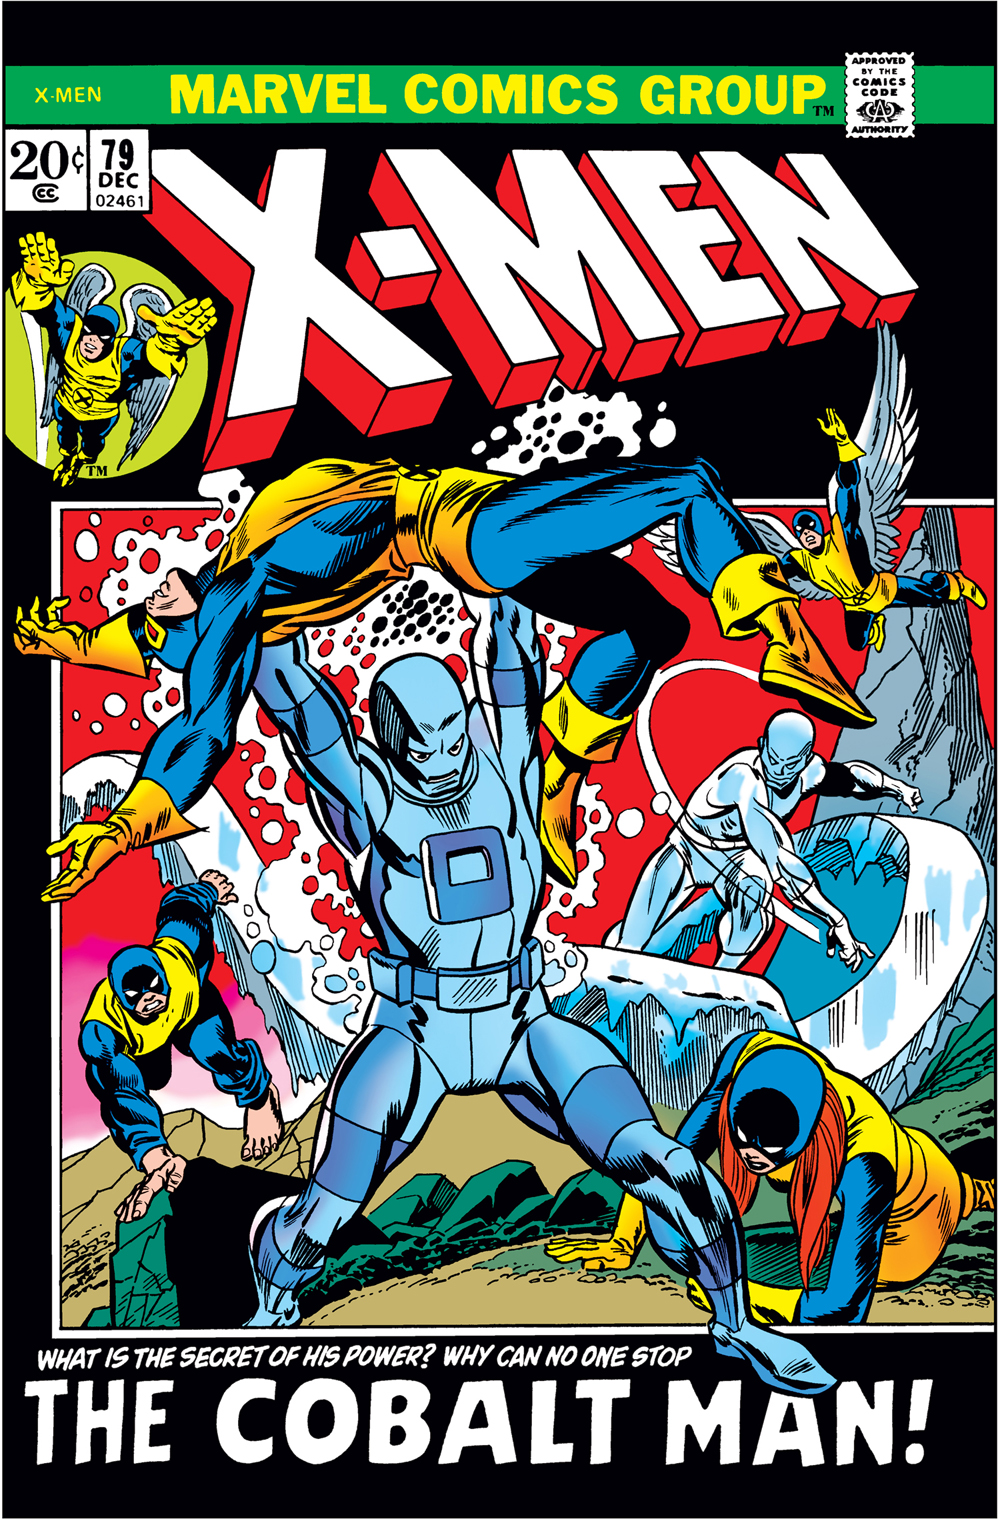 Uncanny X-Men (1963) #79